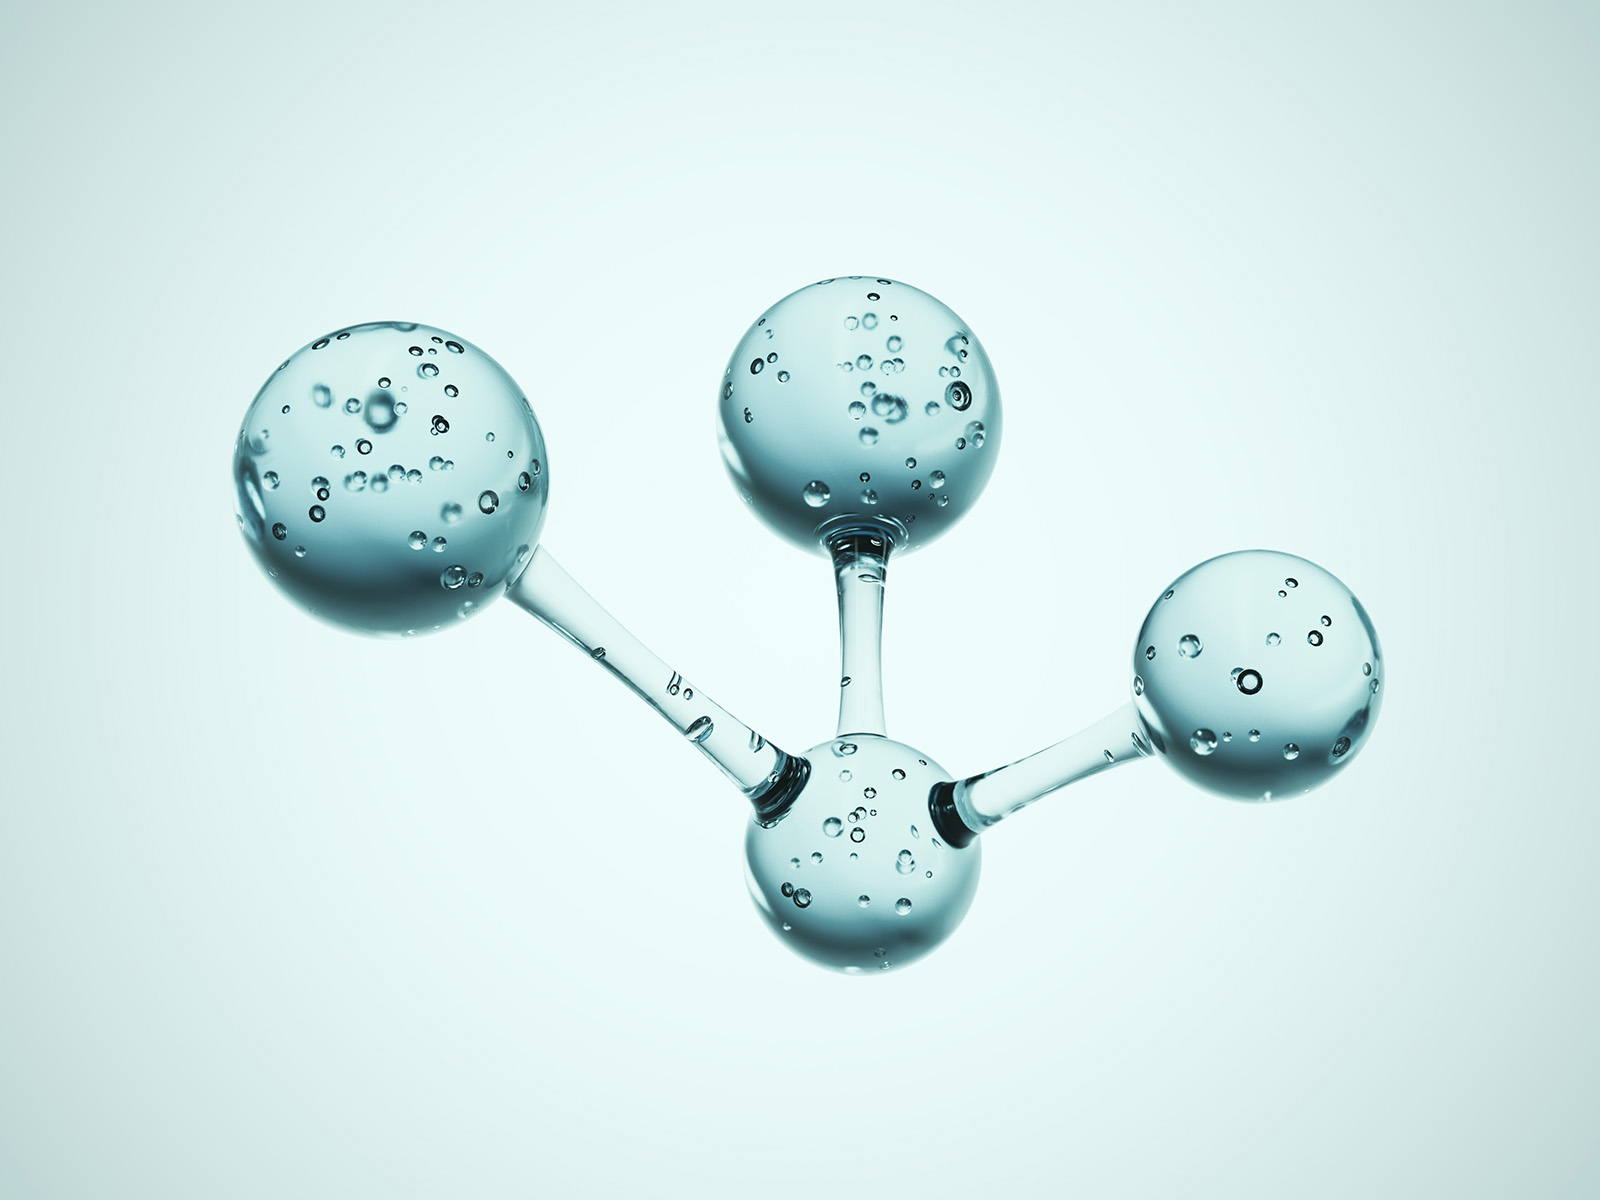 Free atoms / molecules mockup